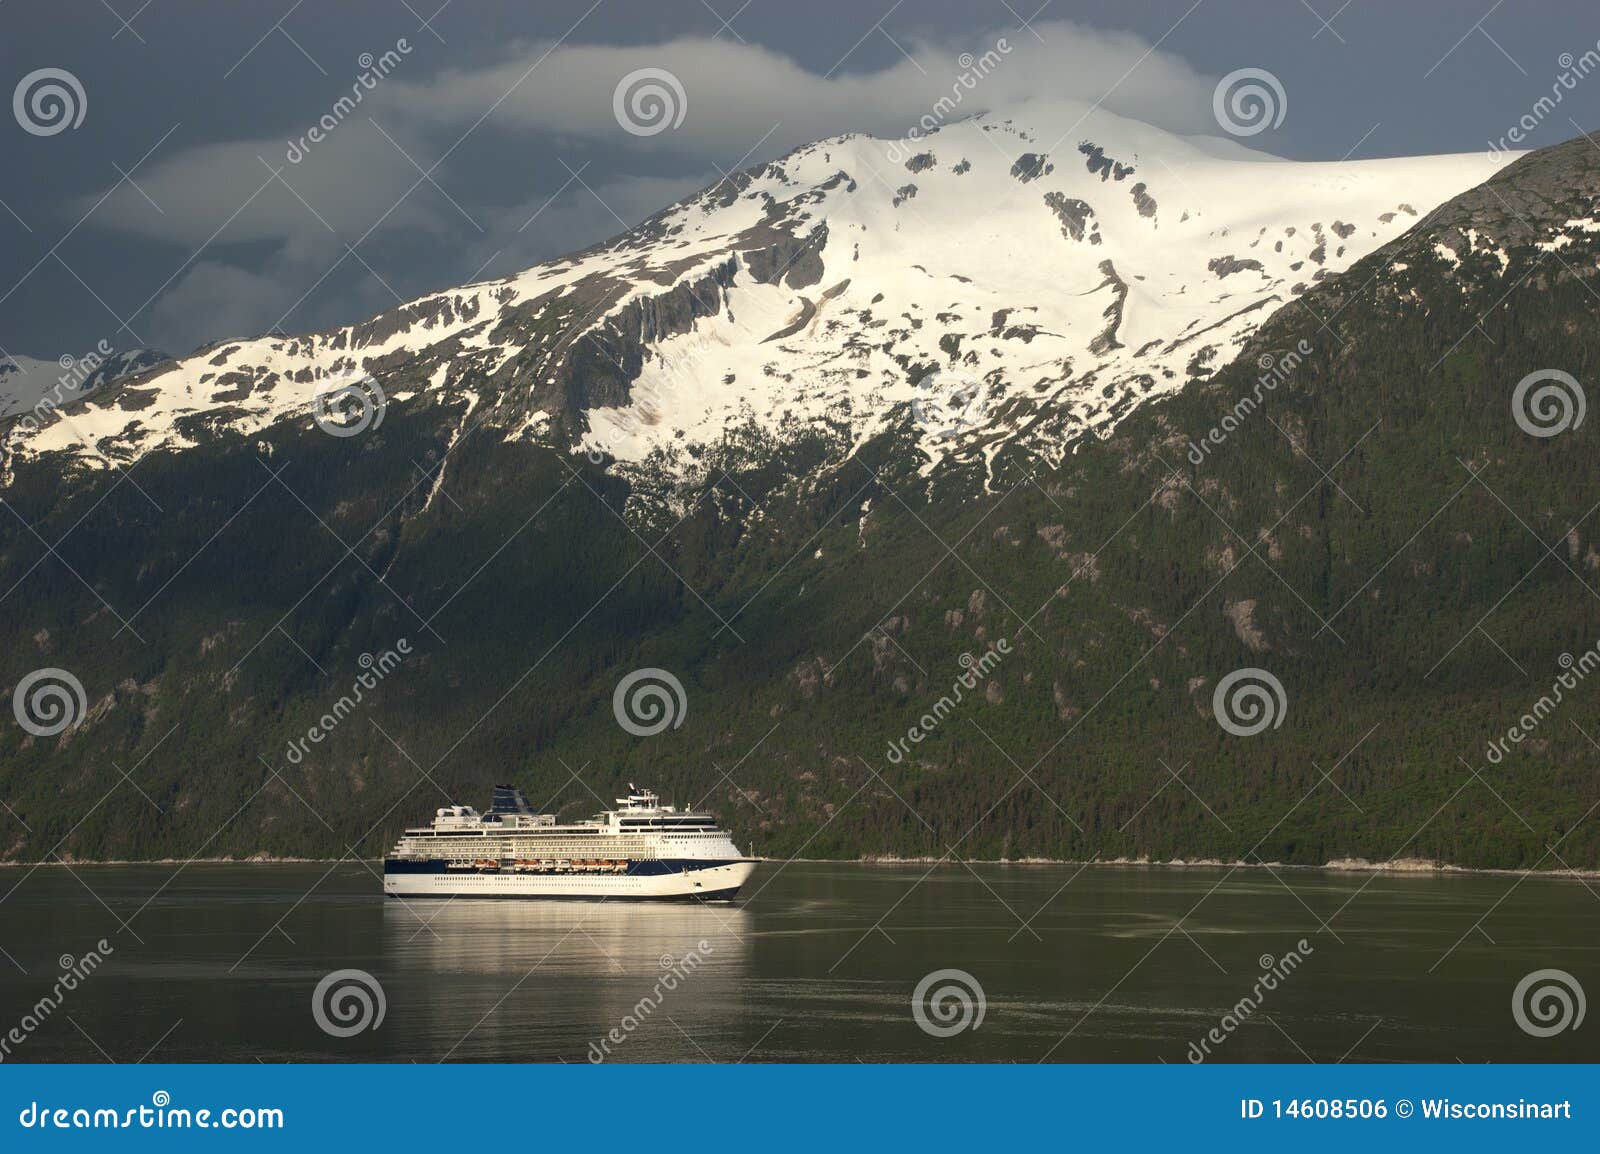 cruise ship crusing fjord in alaska inside passage